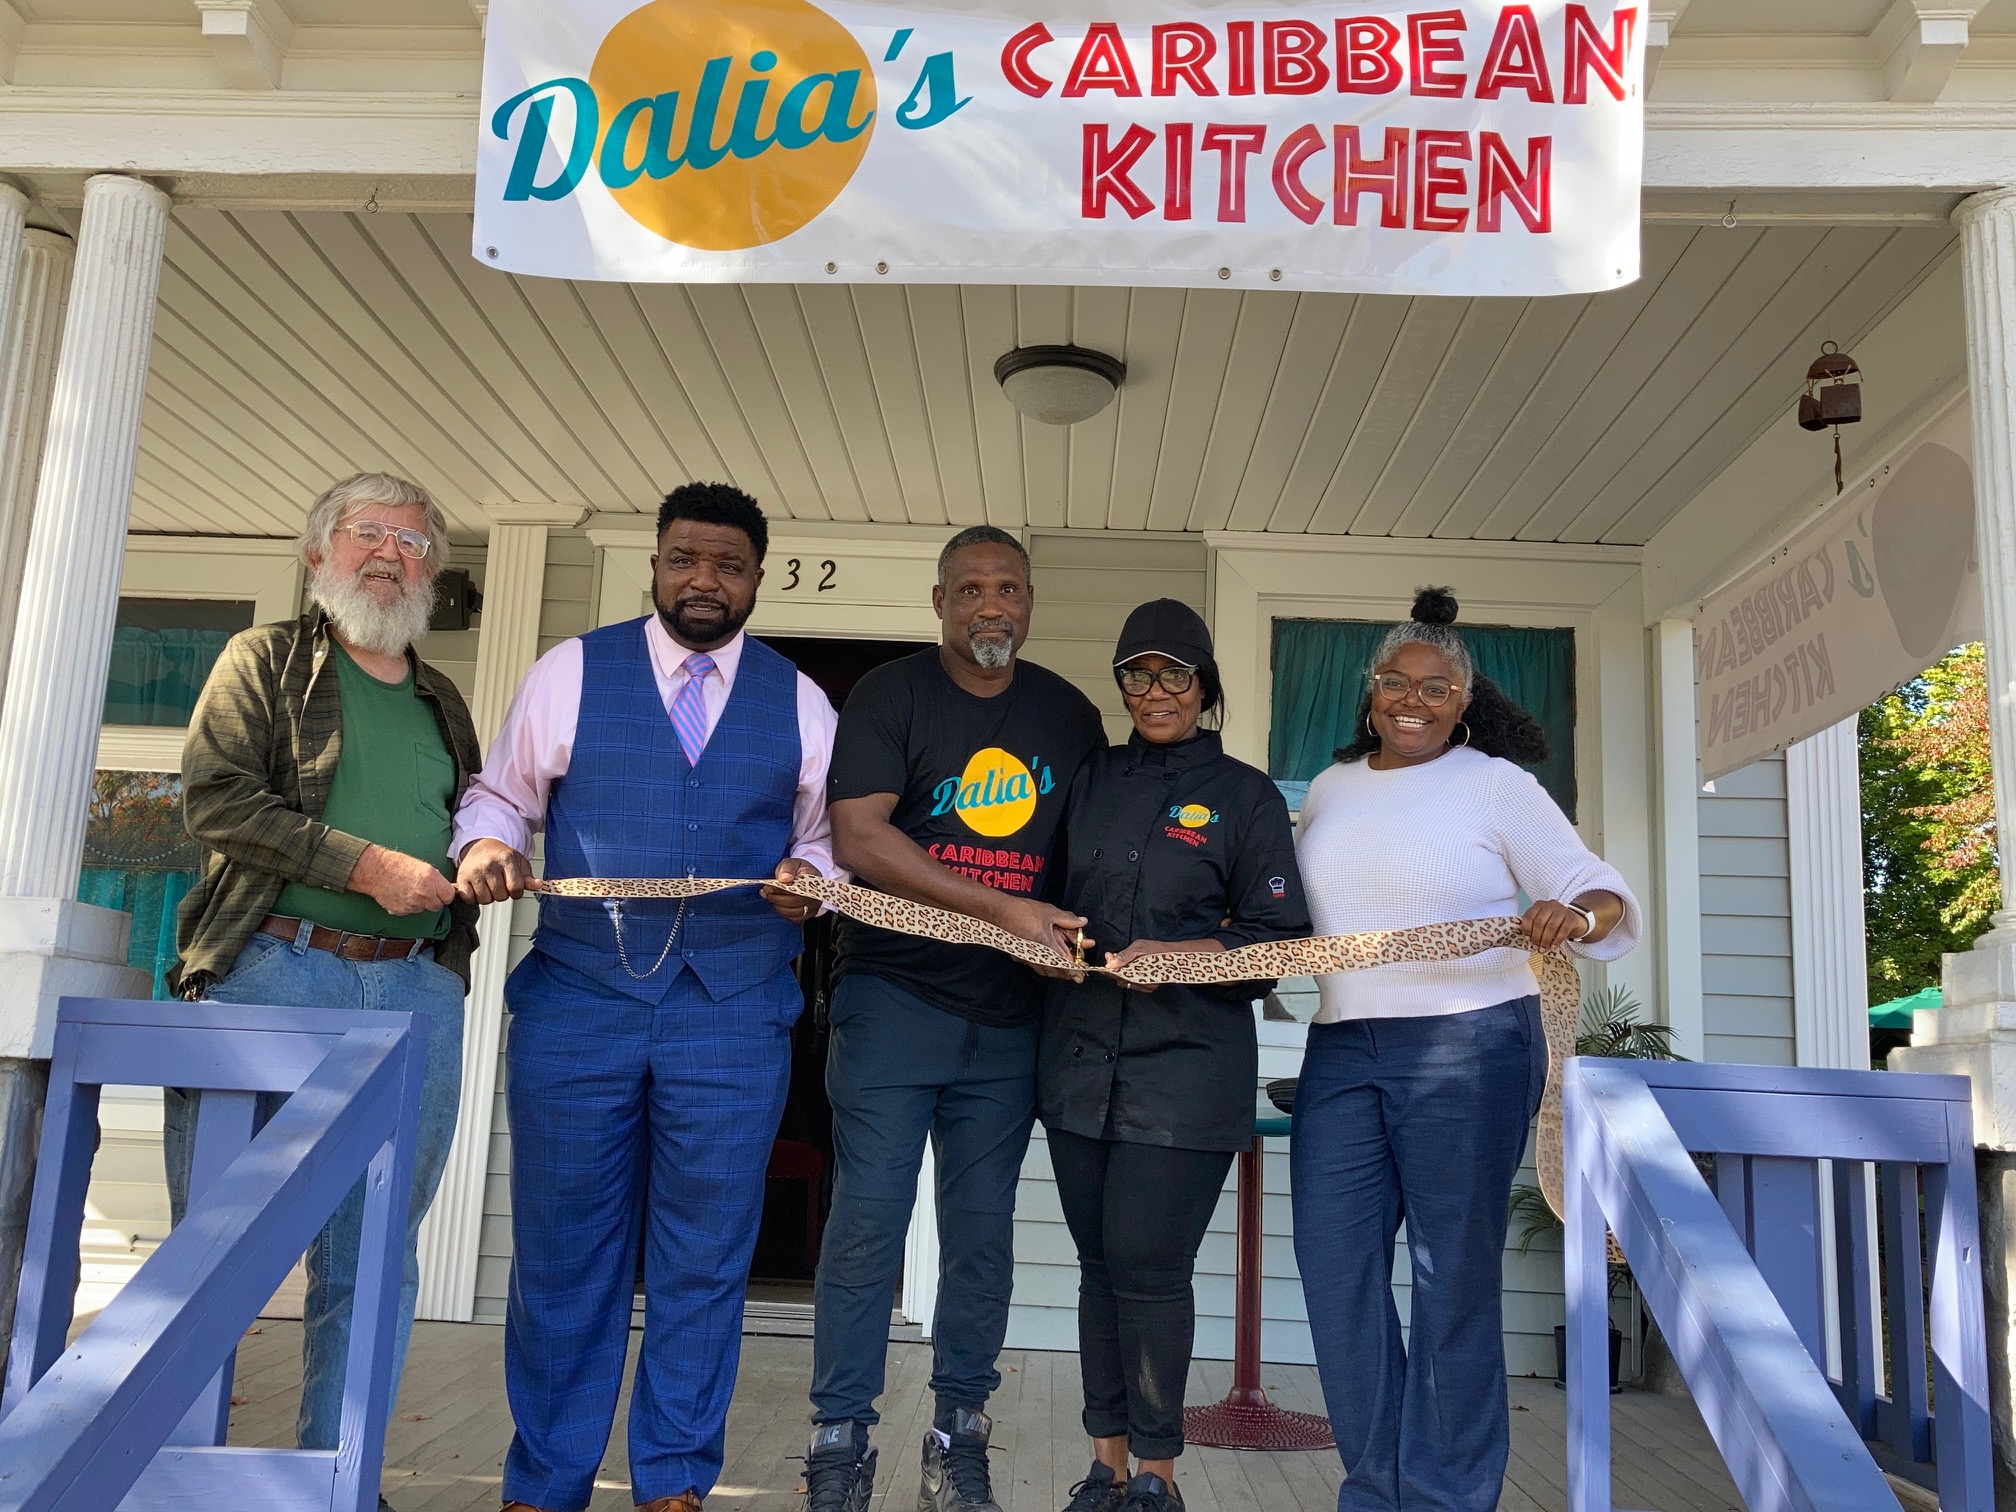 Dalia's Caribbean Kitchen, Youngstown